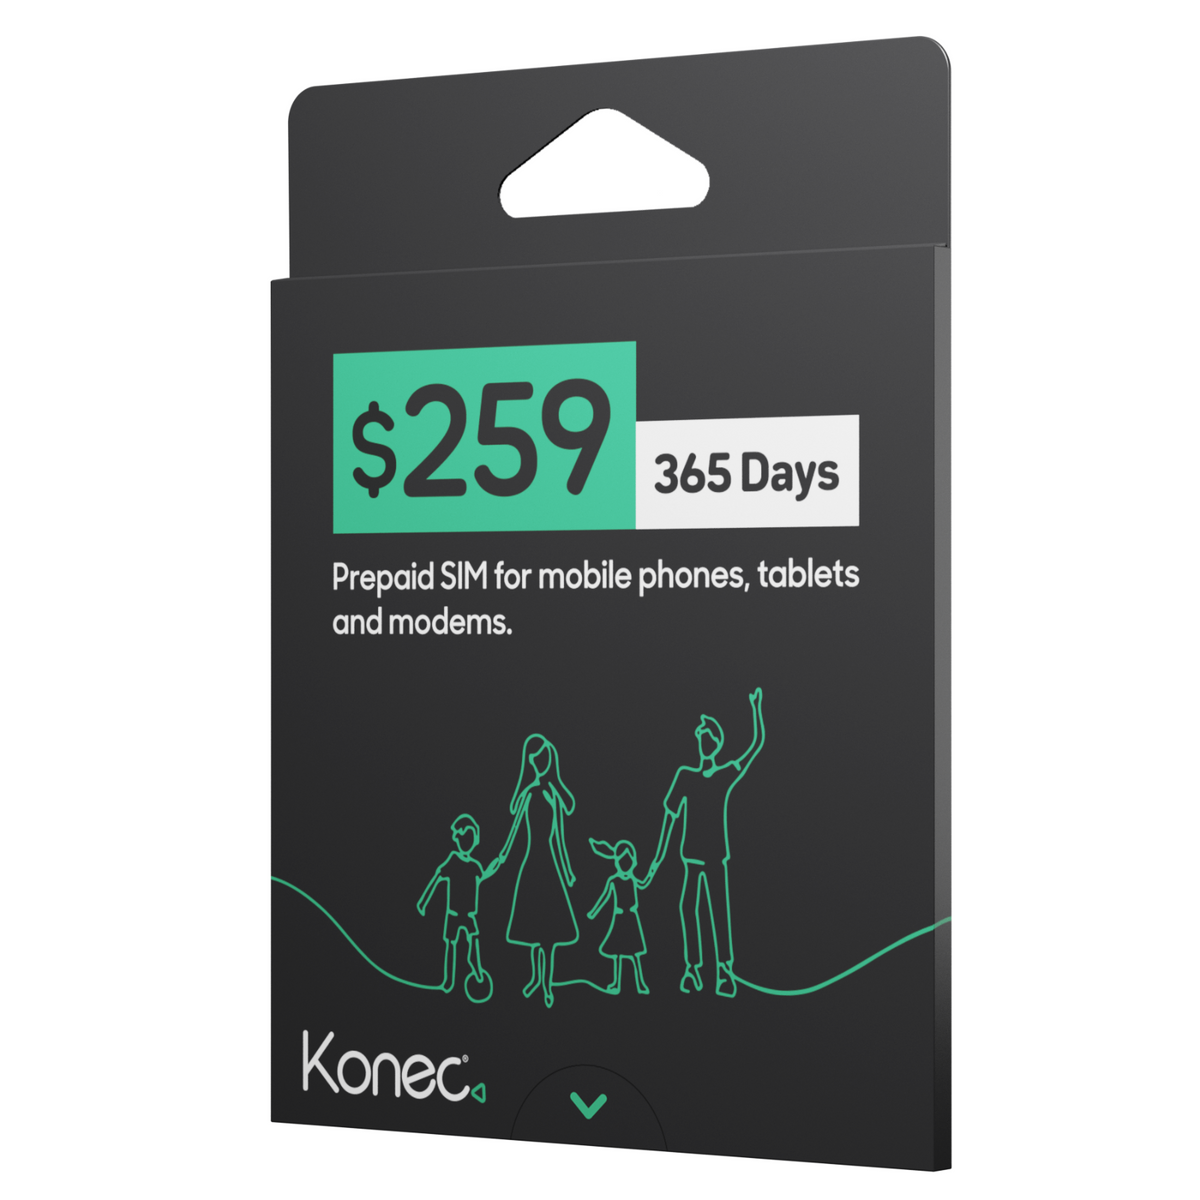 Konec 259 365 days 259GB SIM Starter Pack (Pre-Paid)